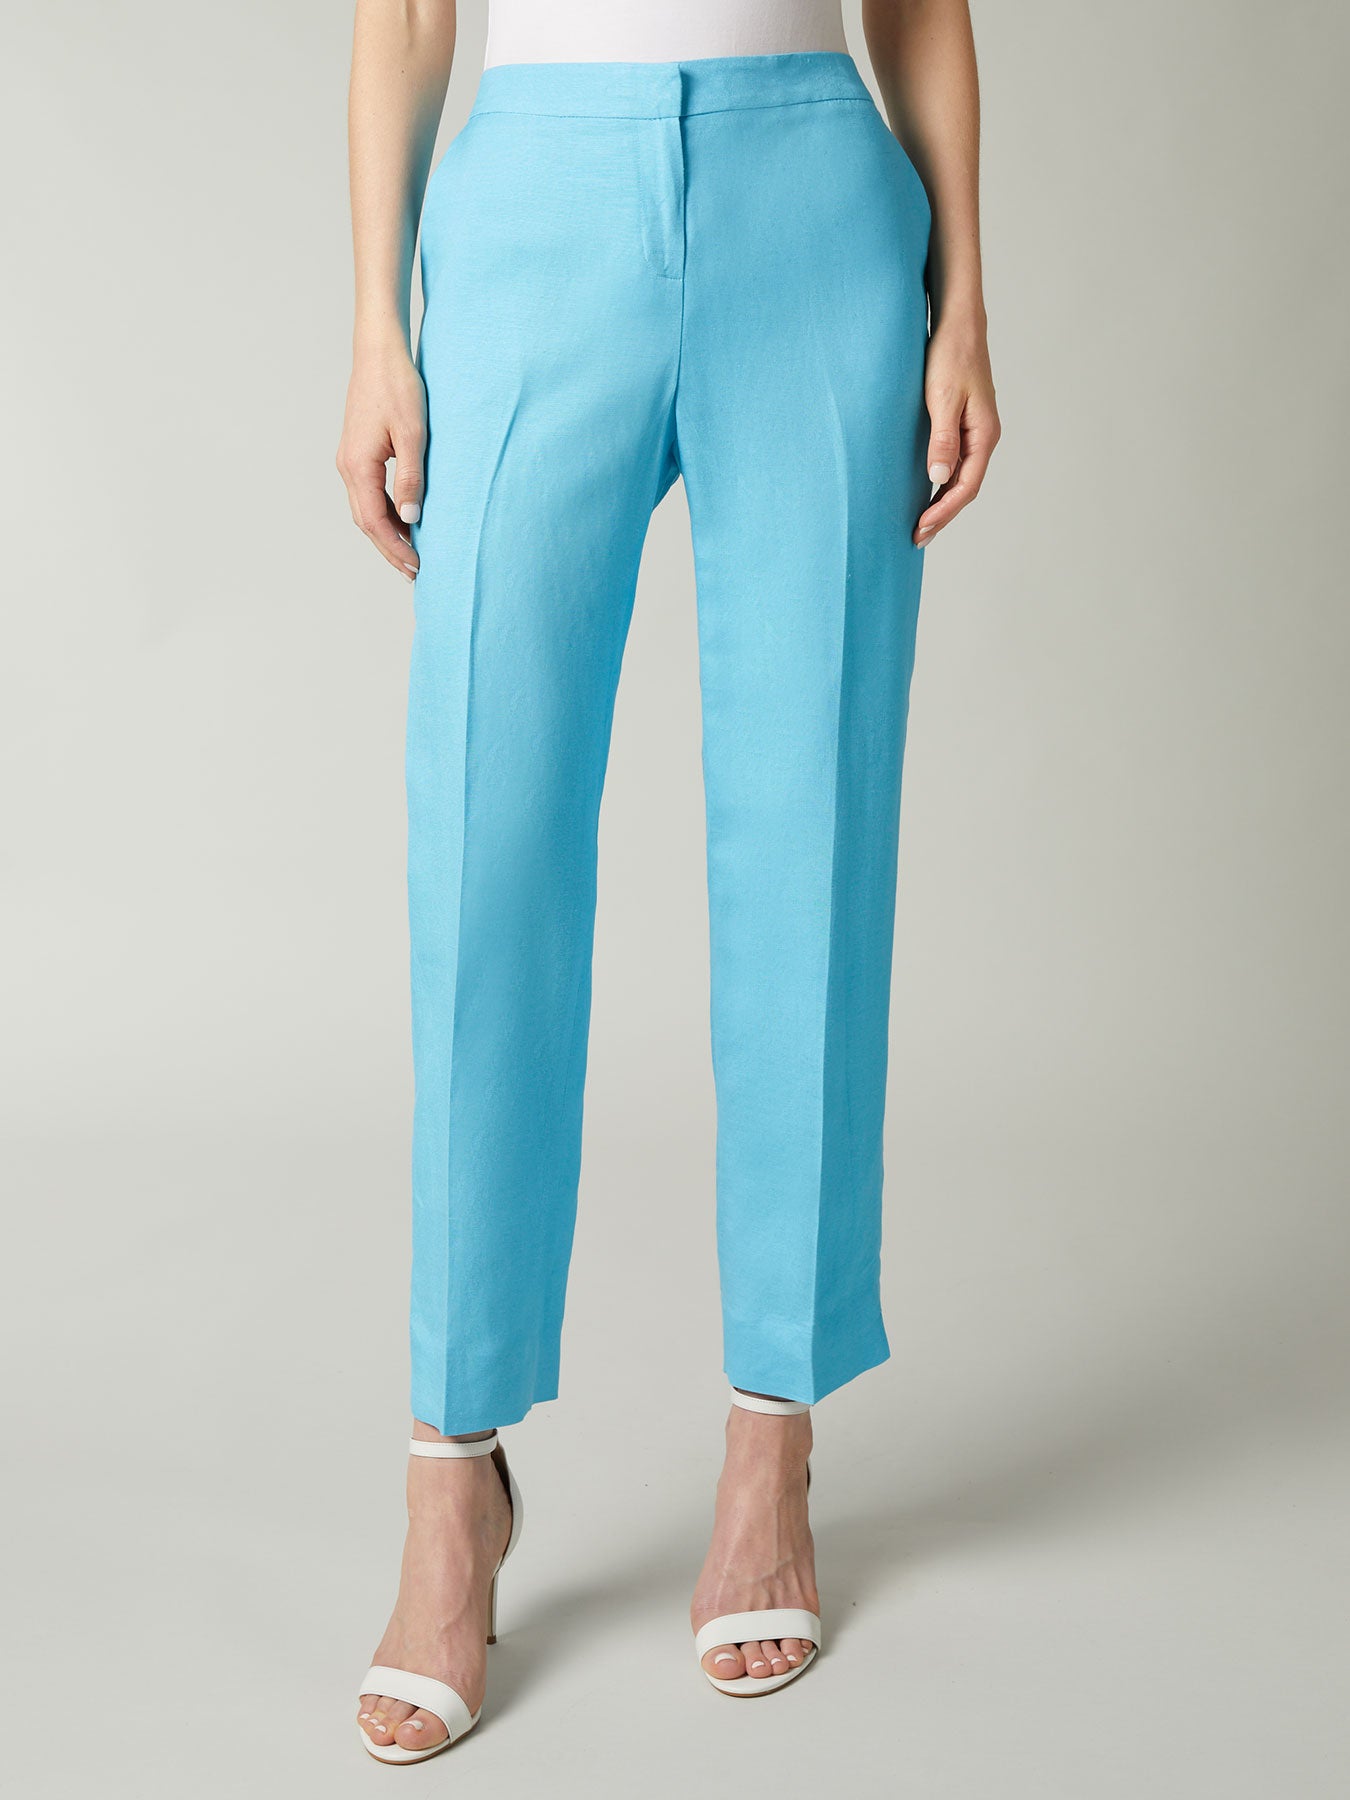 Kasper Women's Kate Classic Fit Pants Size 8 Gray Flat Front Lined. C21